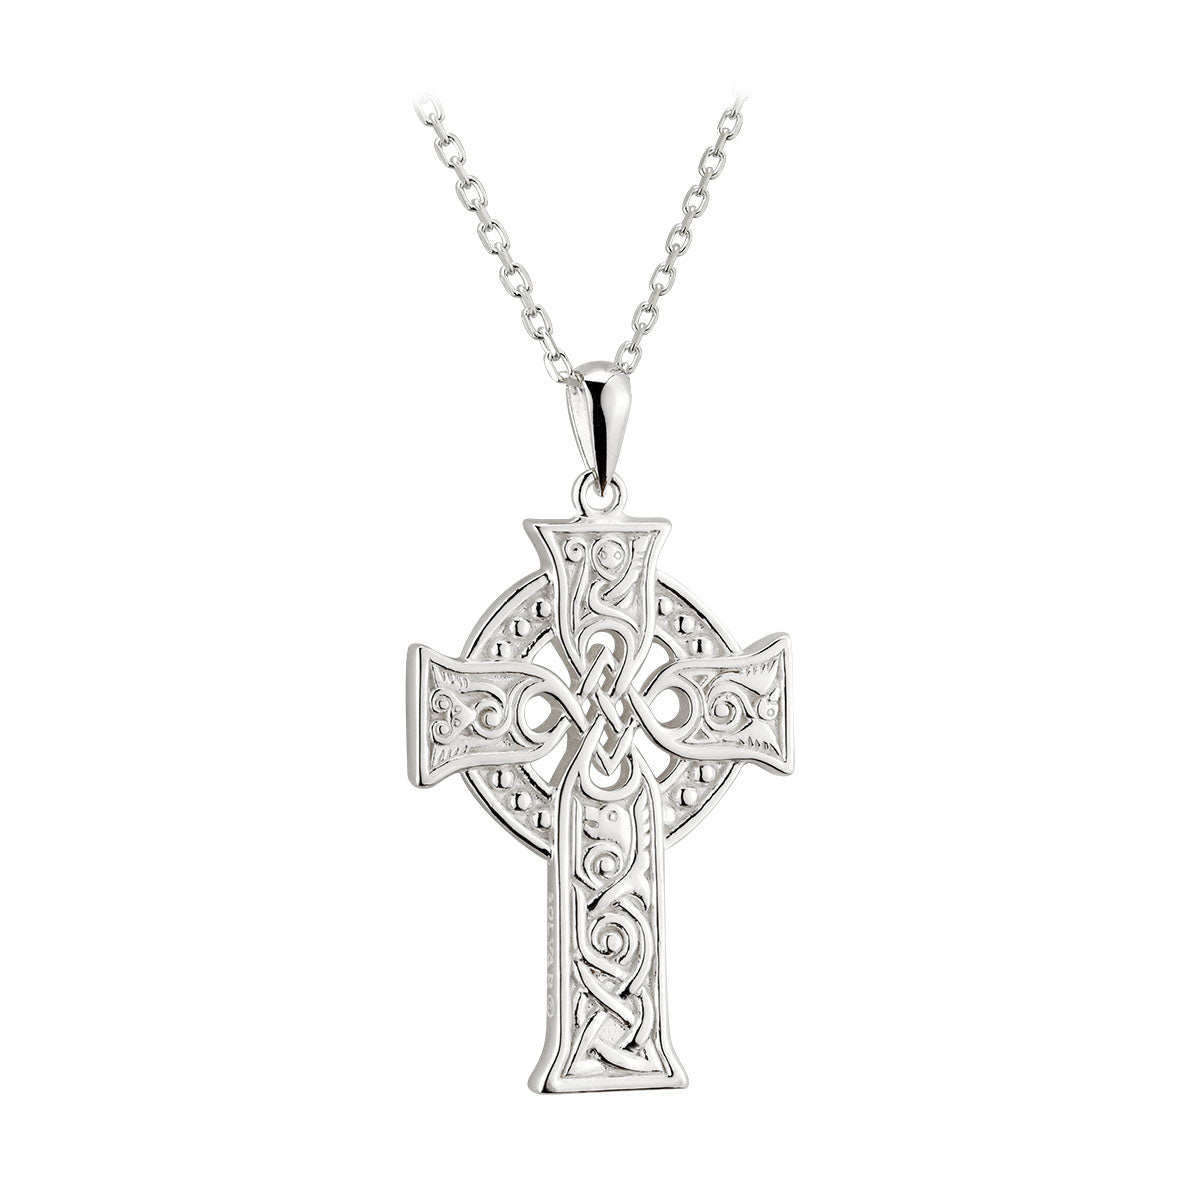 sterling silver small apostles celtic cross pendant s46604 from Solvar